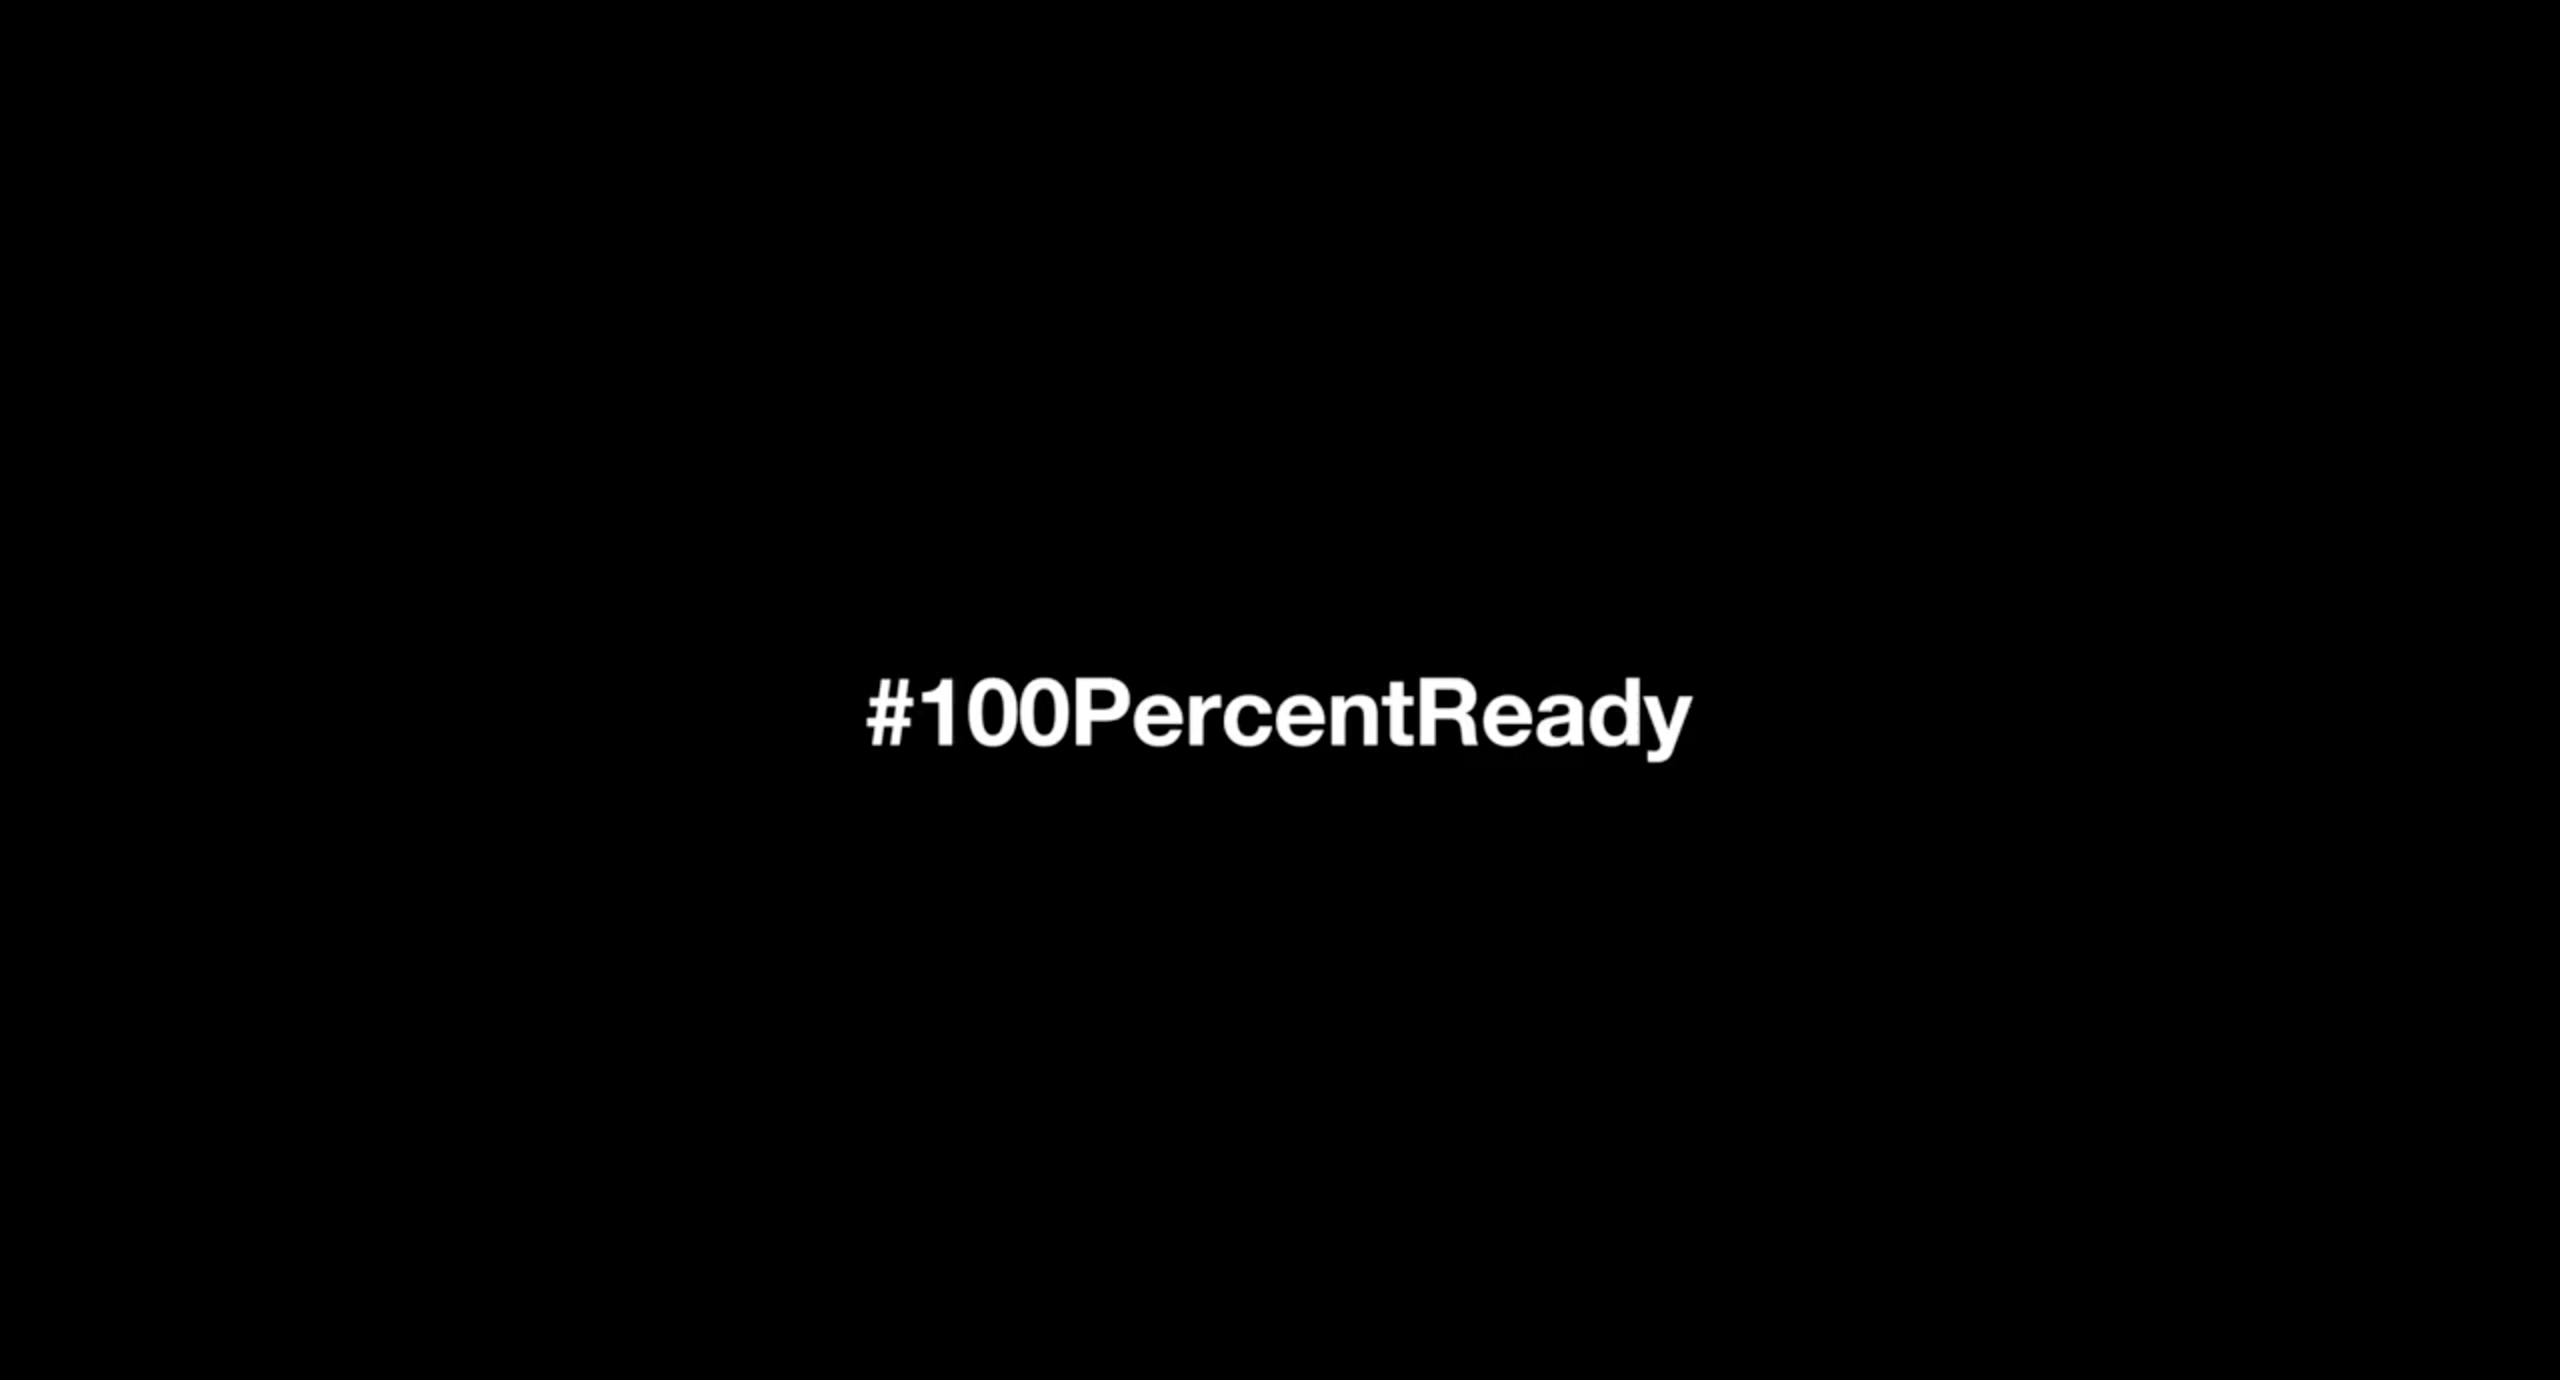 We Are #100PercentReady